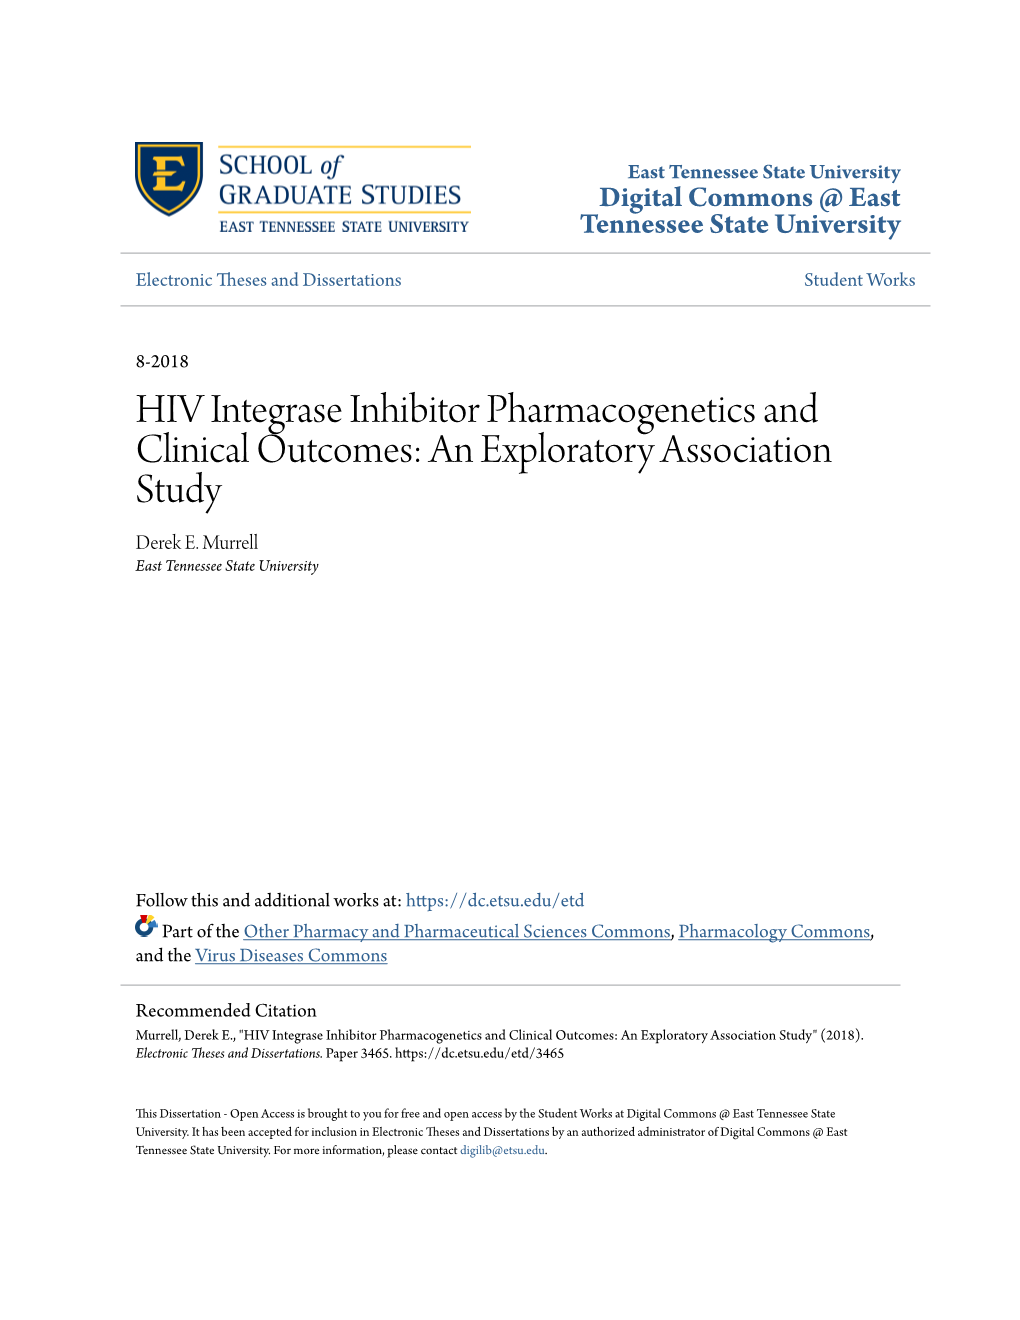 HIV Integrase Inhibitor Pharmacogenetics and Clinical Outcomes: an Exploratory Association Study Derek E